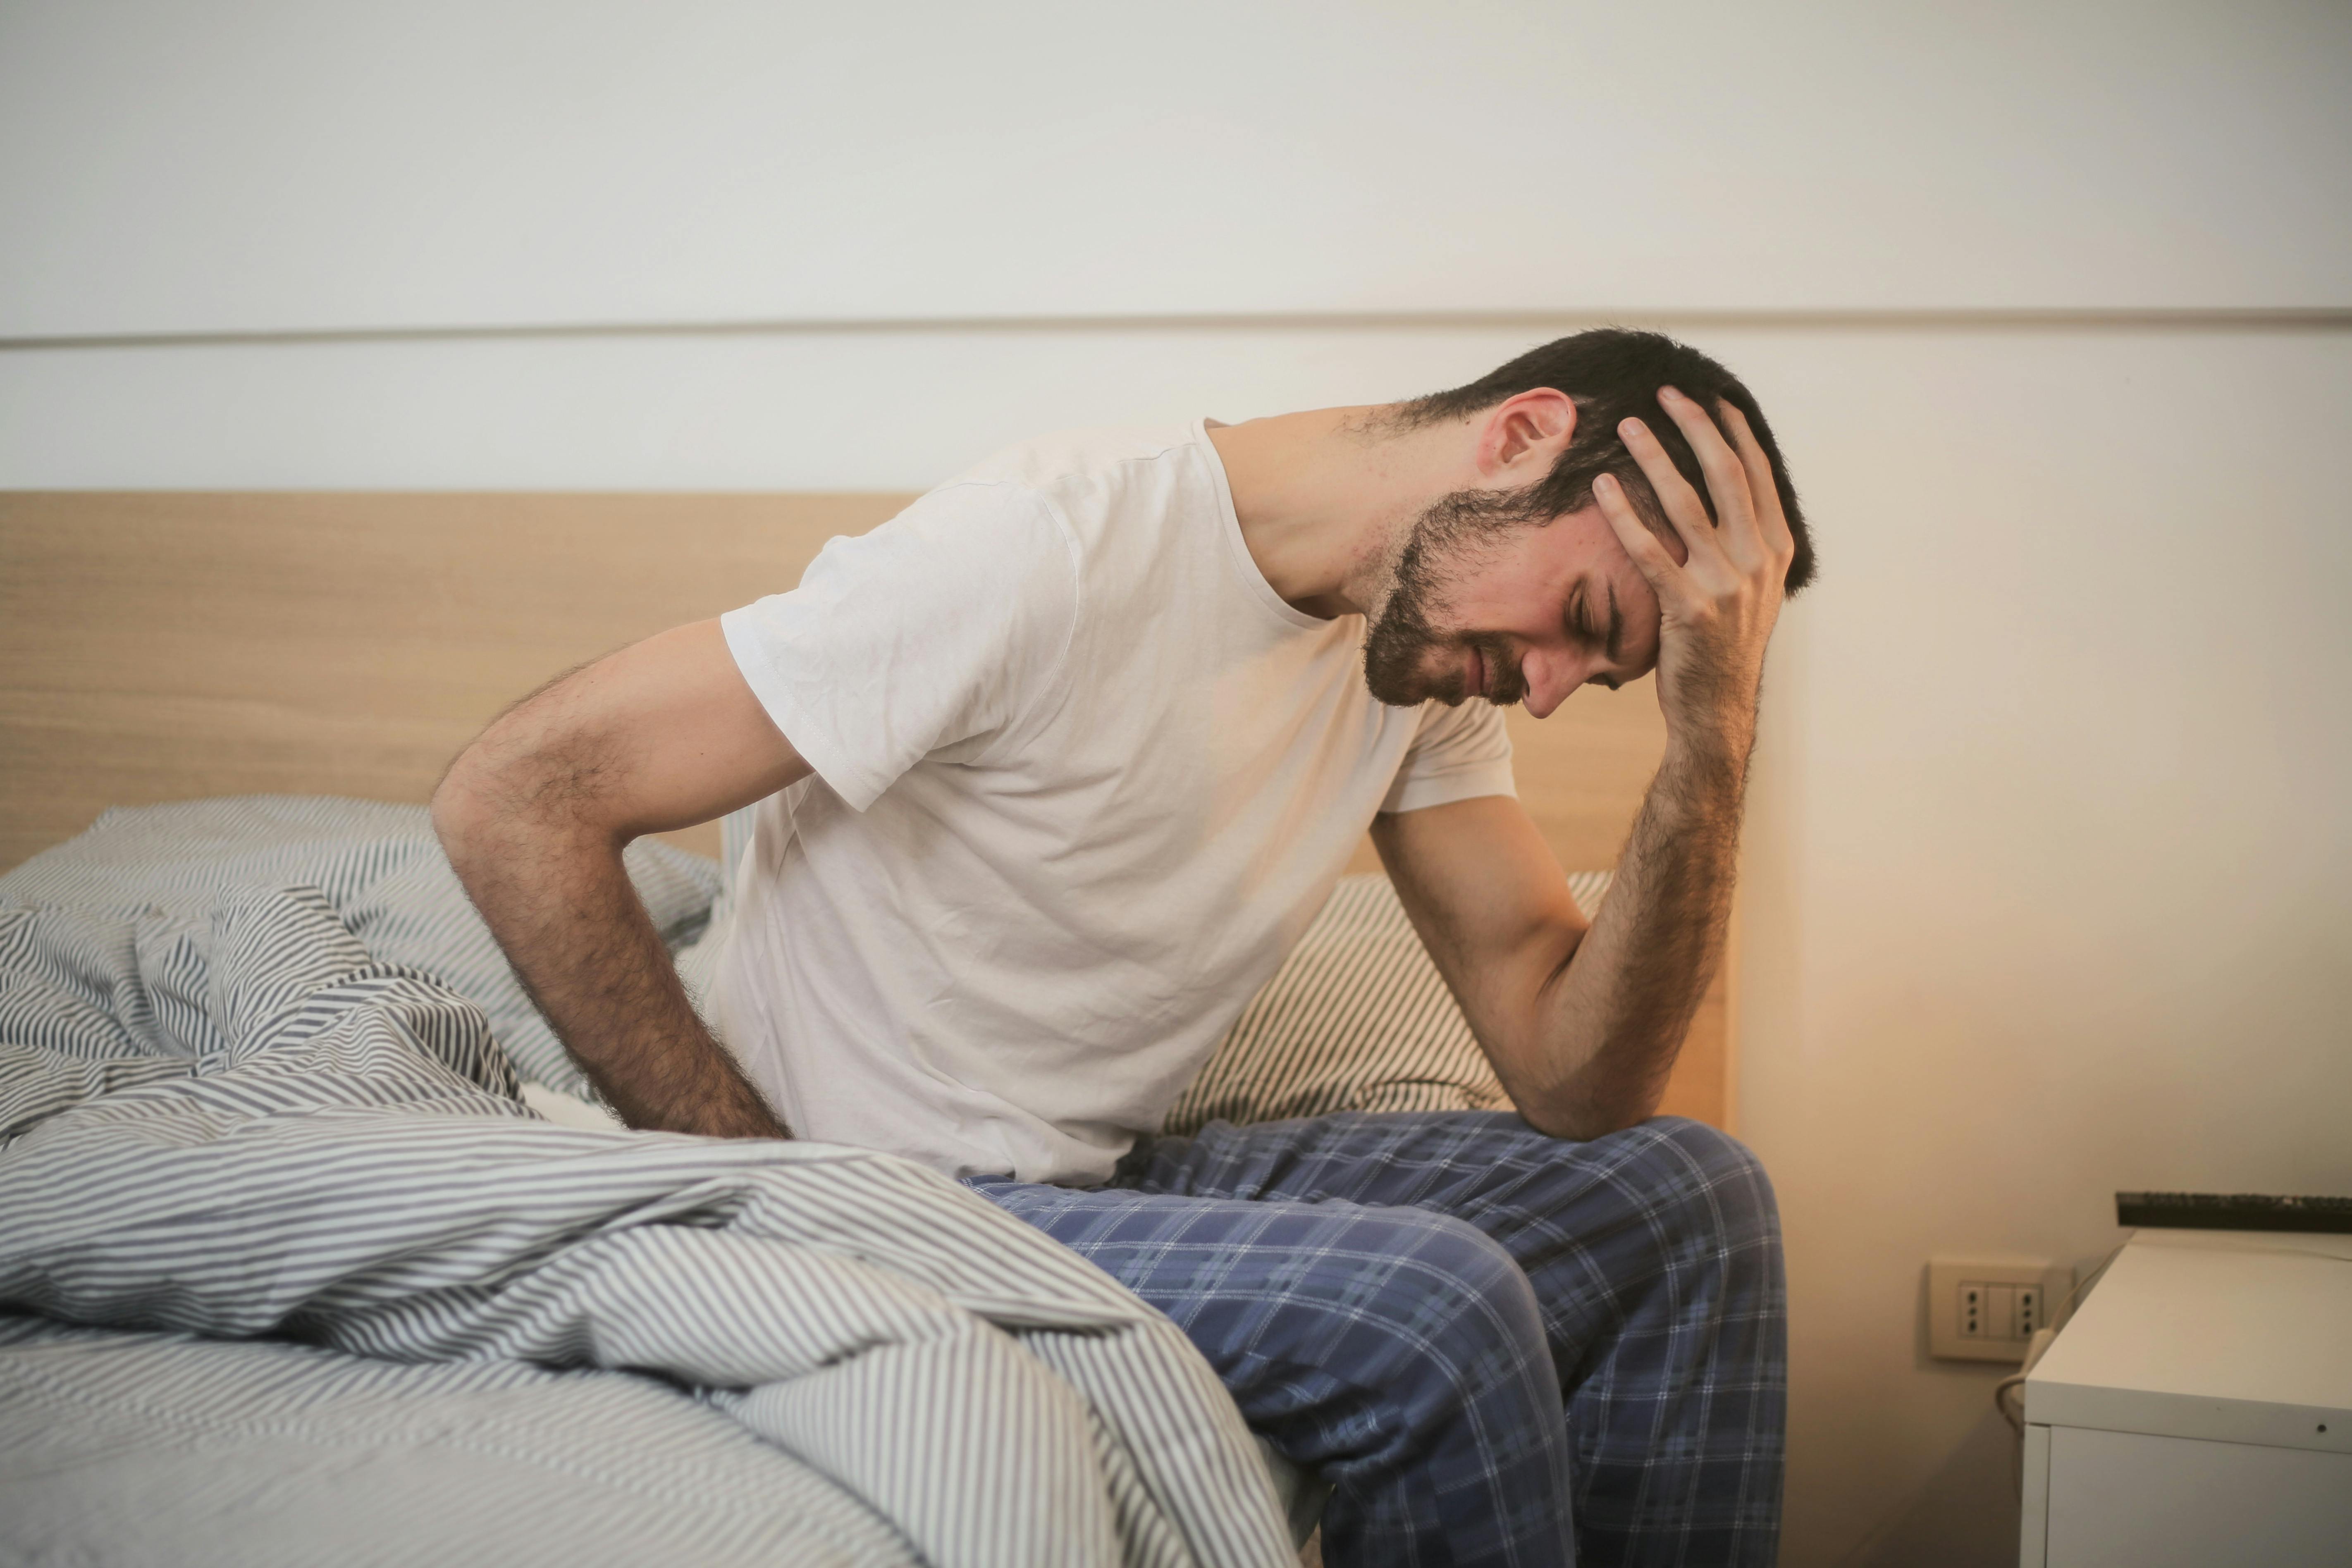 An upset man in bed | Source: Pexels